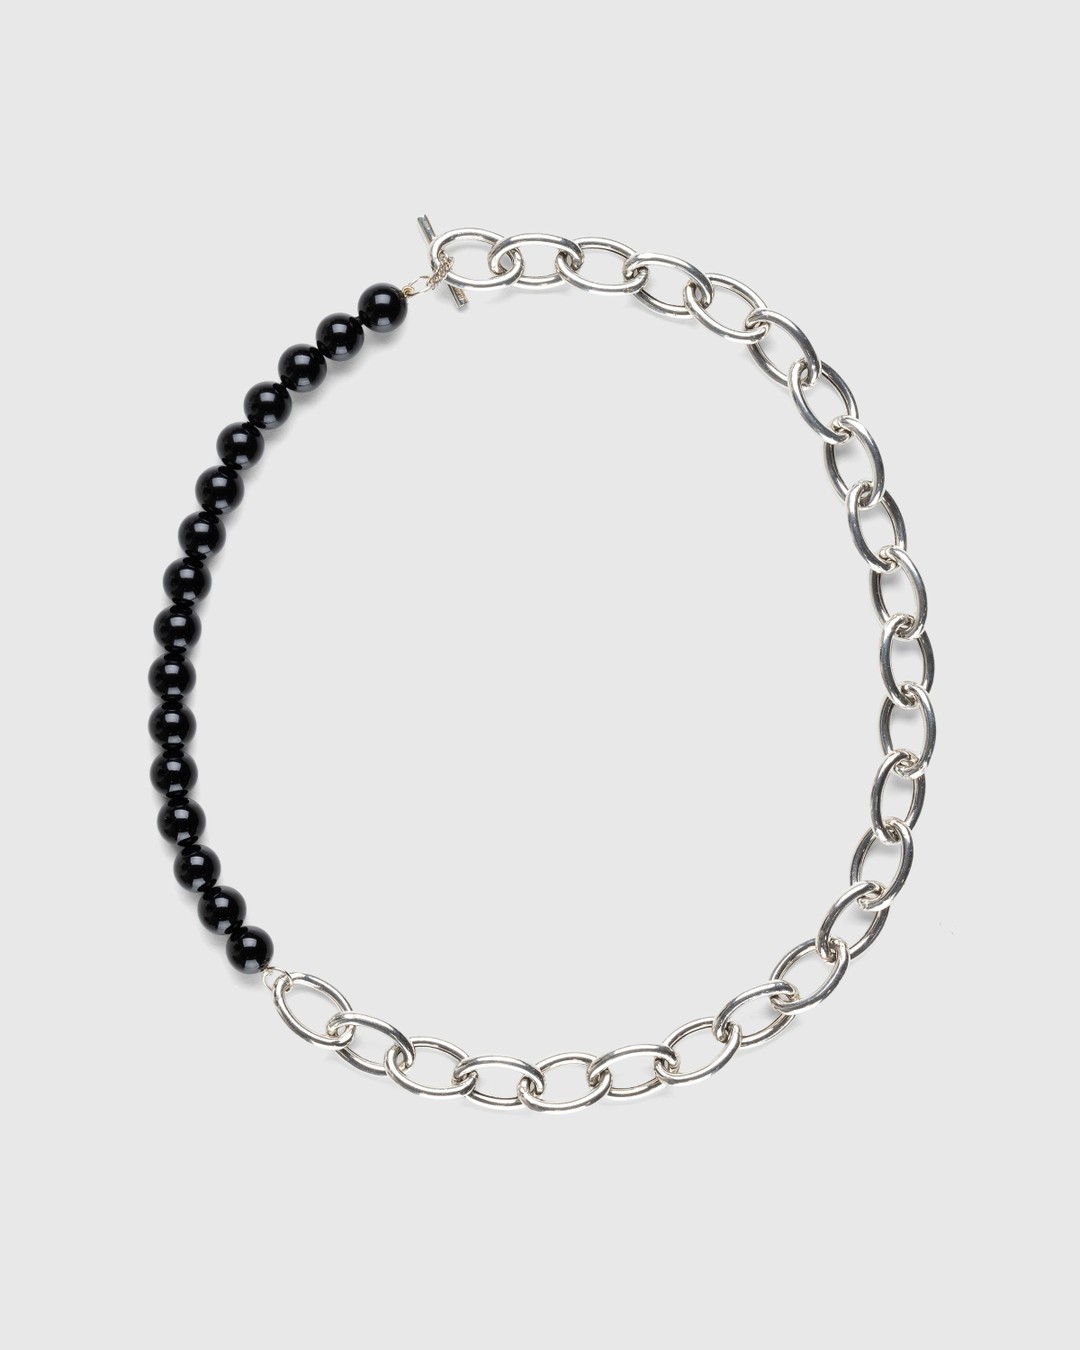 Jil Sander – Solidity Necklace 4 Silver/Black - Jewelry - Multi - Image 1